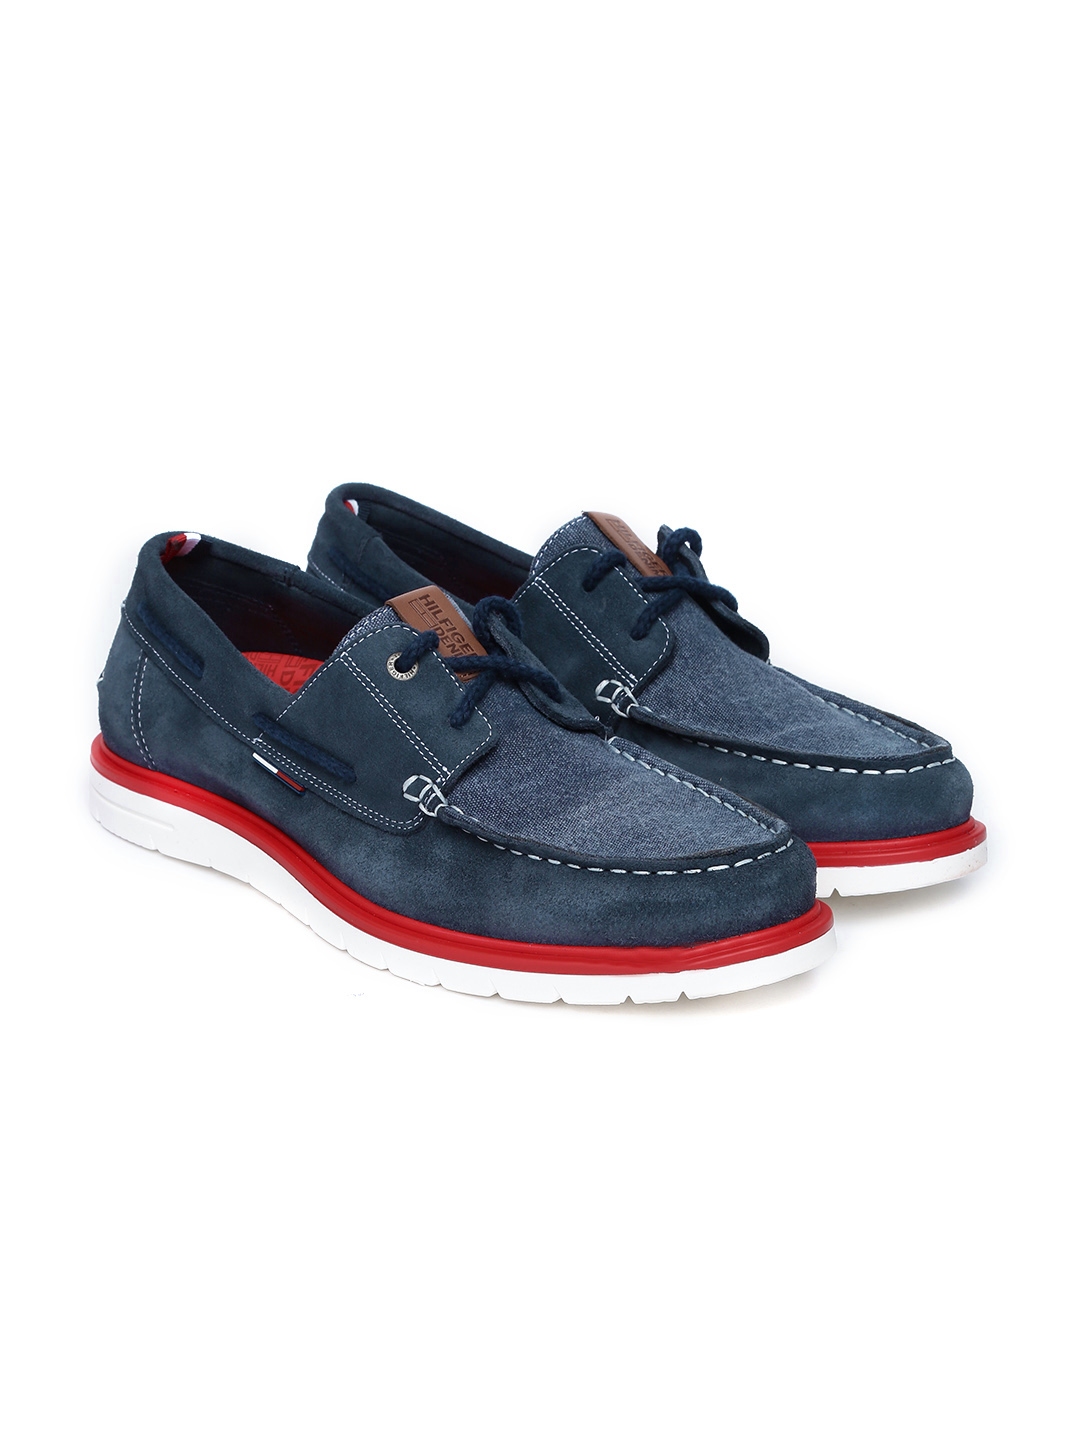 blue suede boat shoes